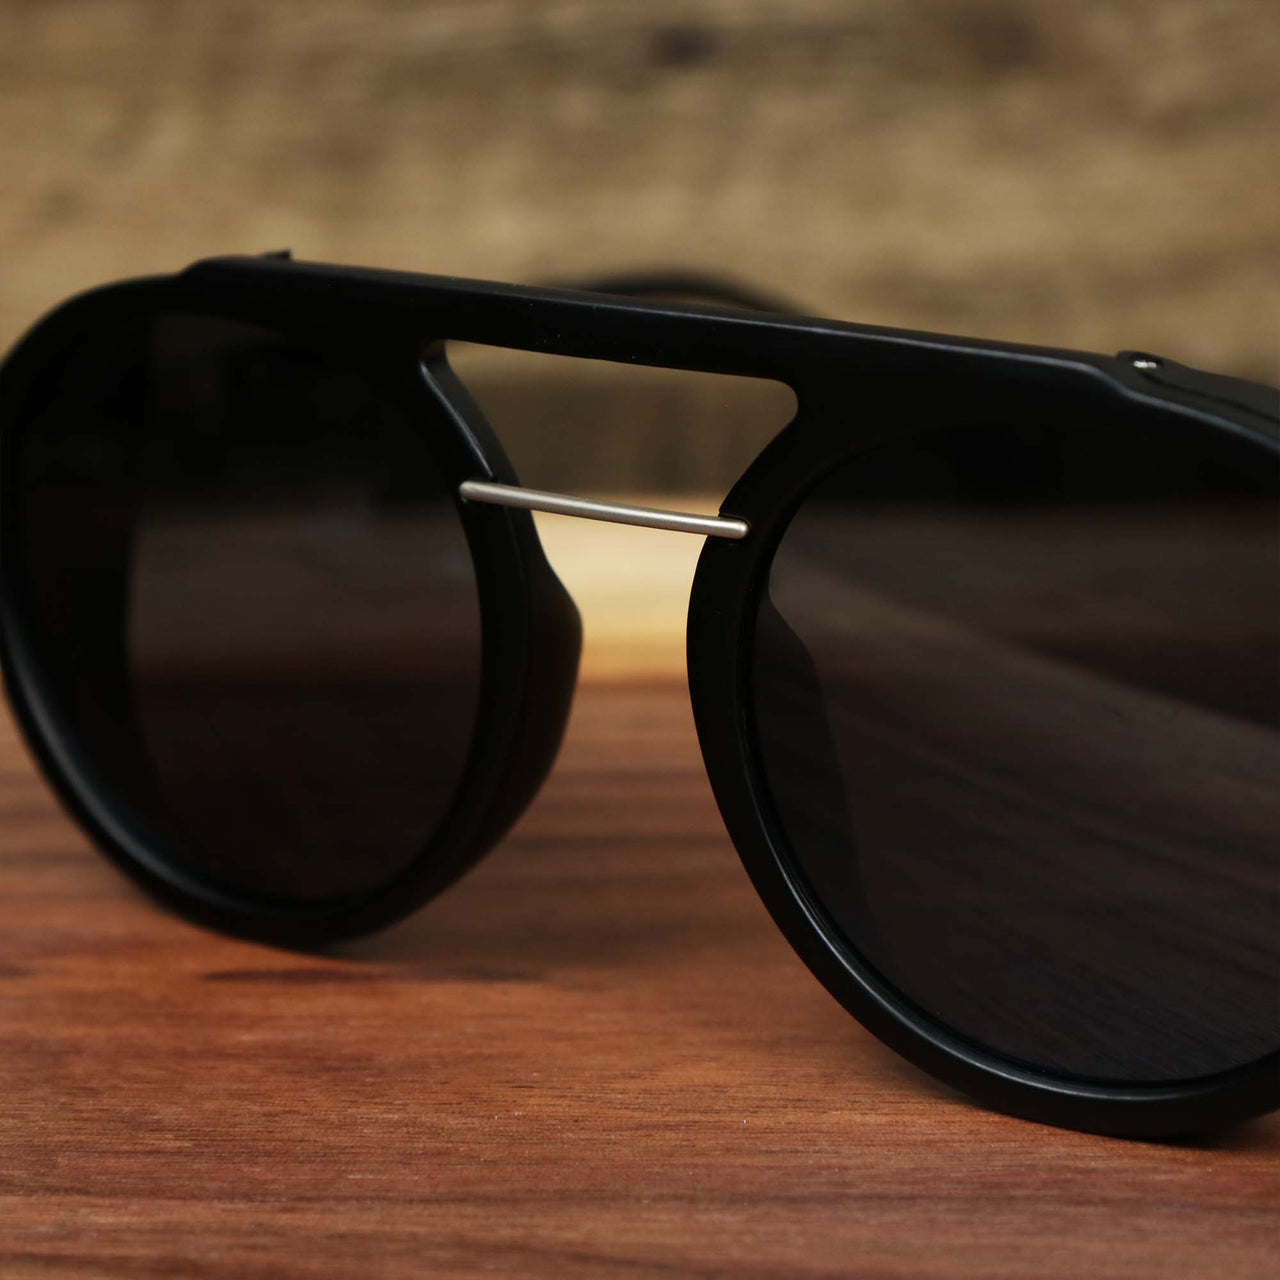 The bridge on the Steampunk Frames Black Lens Sunglasses with Black Frame